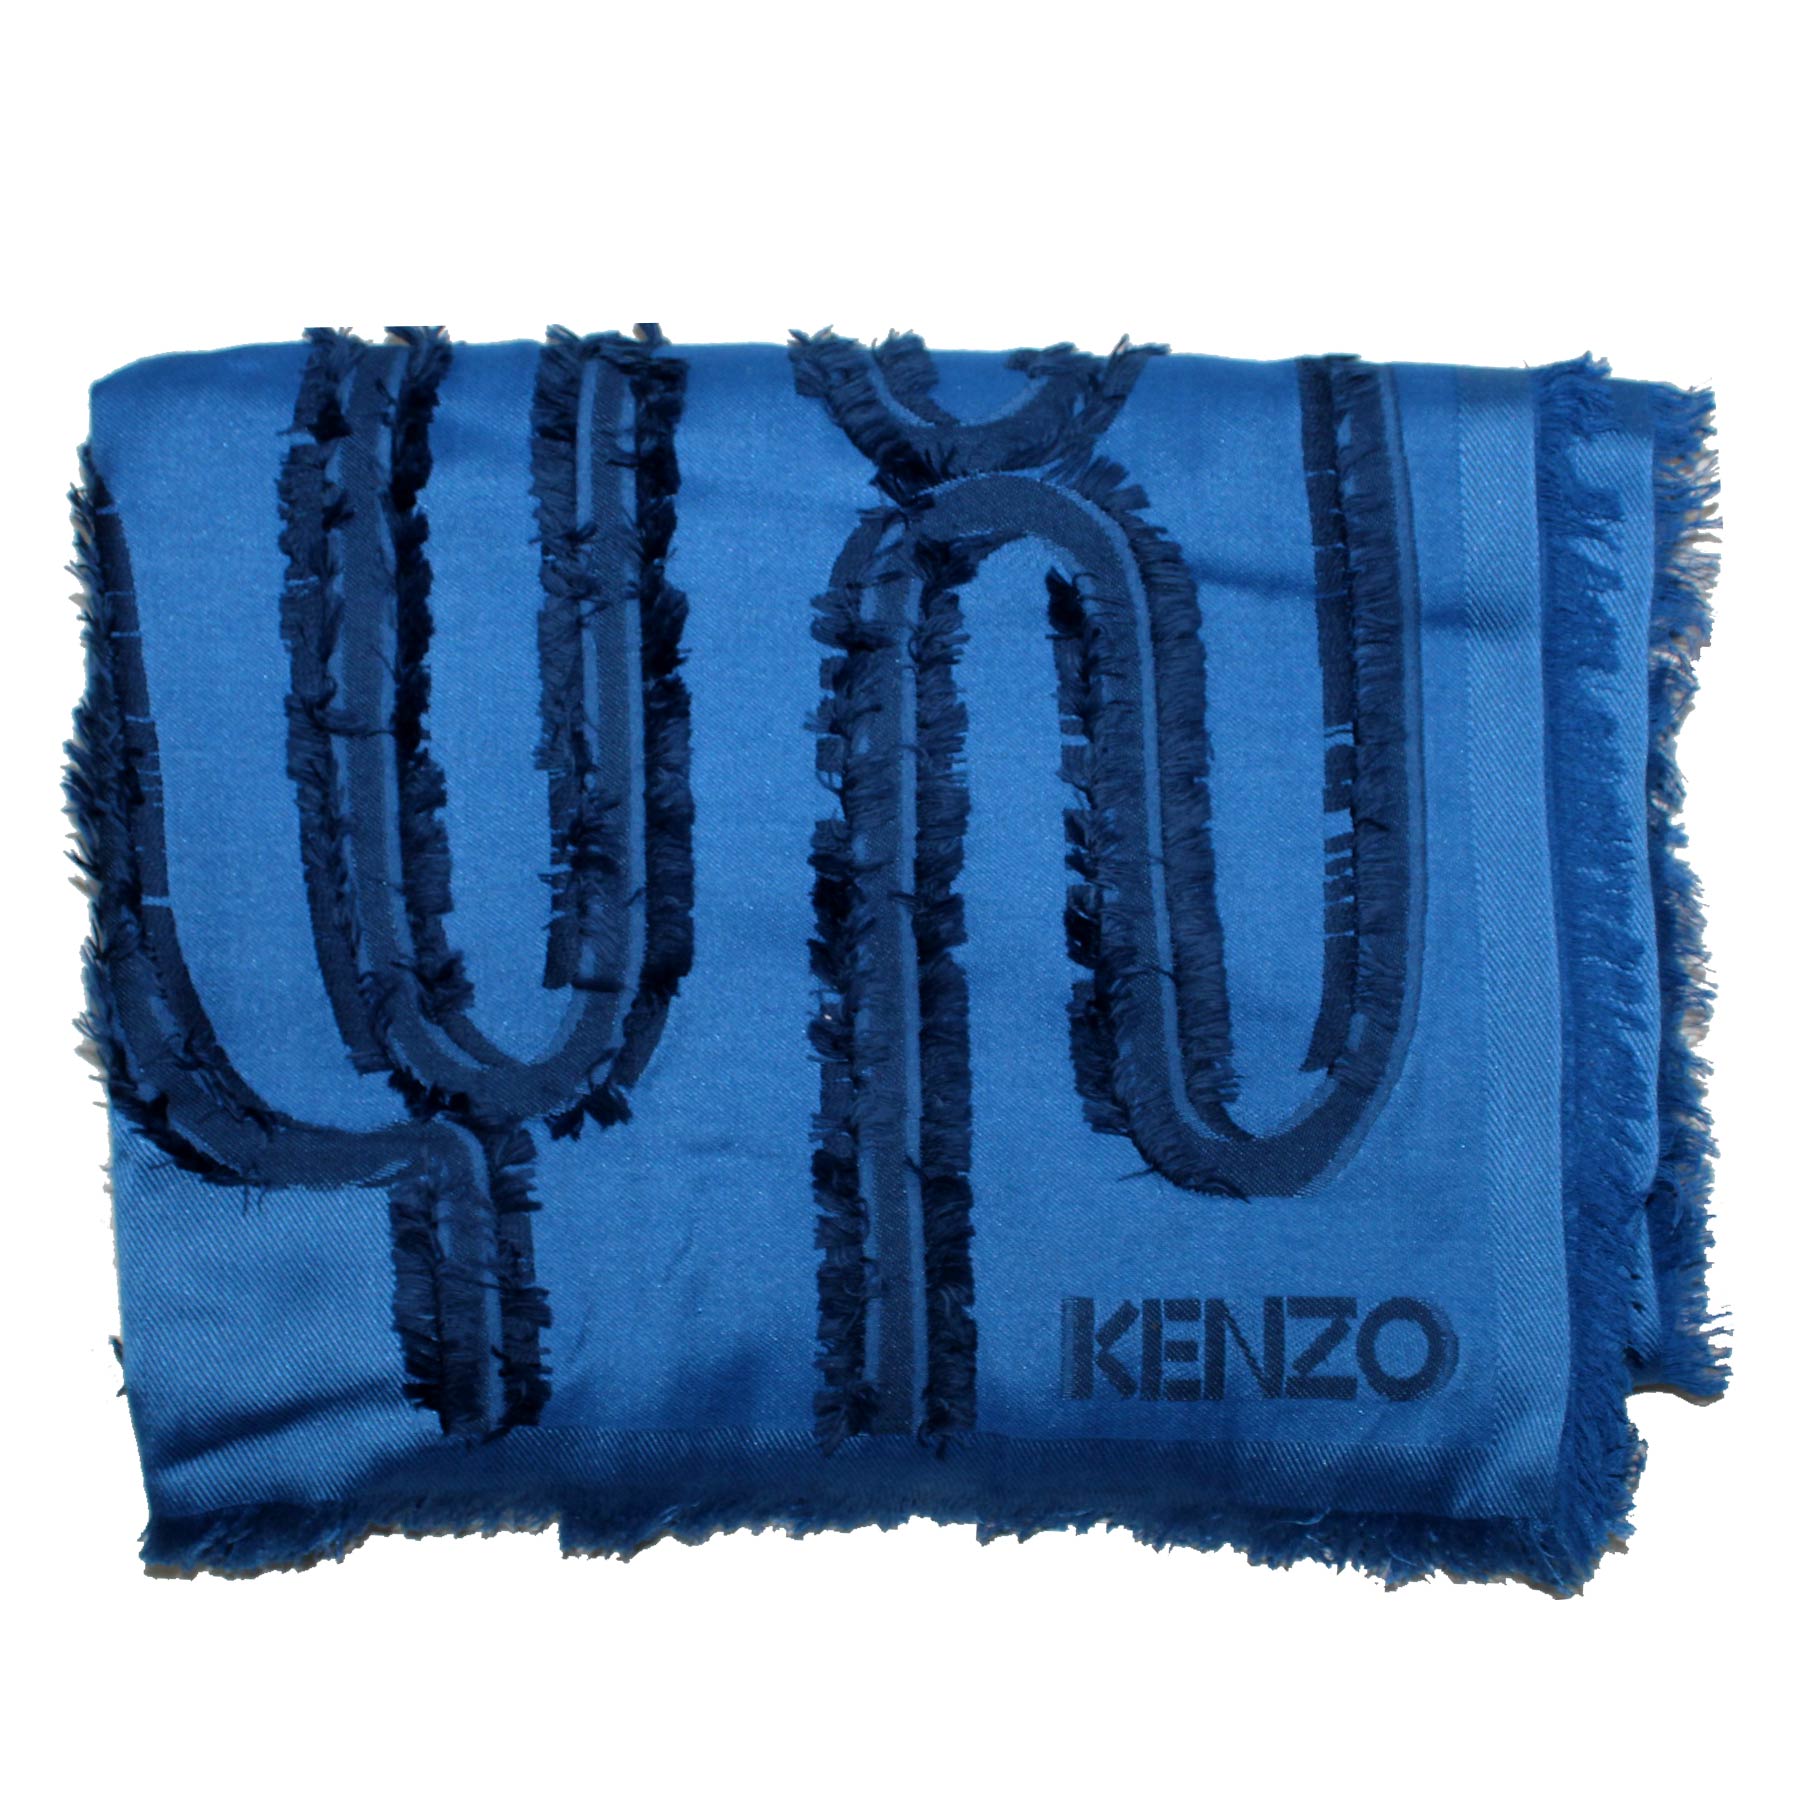 Kenzo Scarf Royal Blue Design - Large Cotton Silk Shawl FINAL SALE